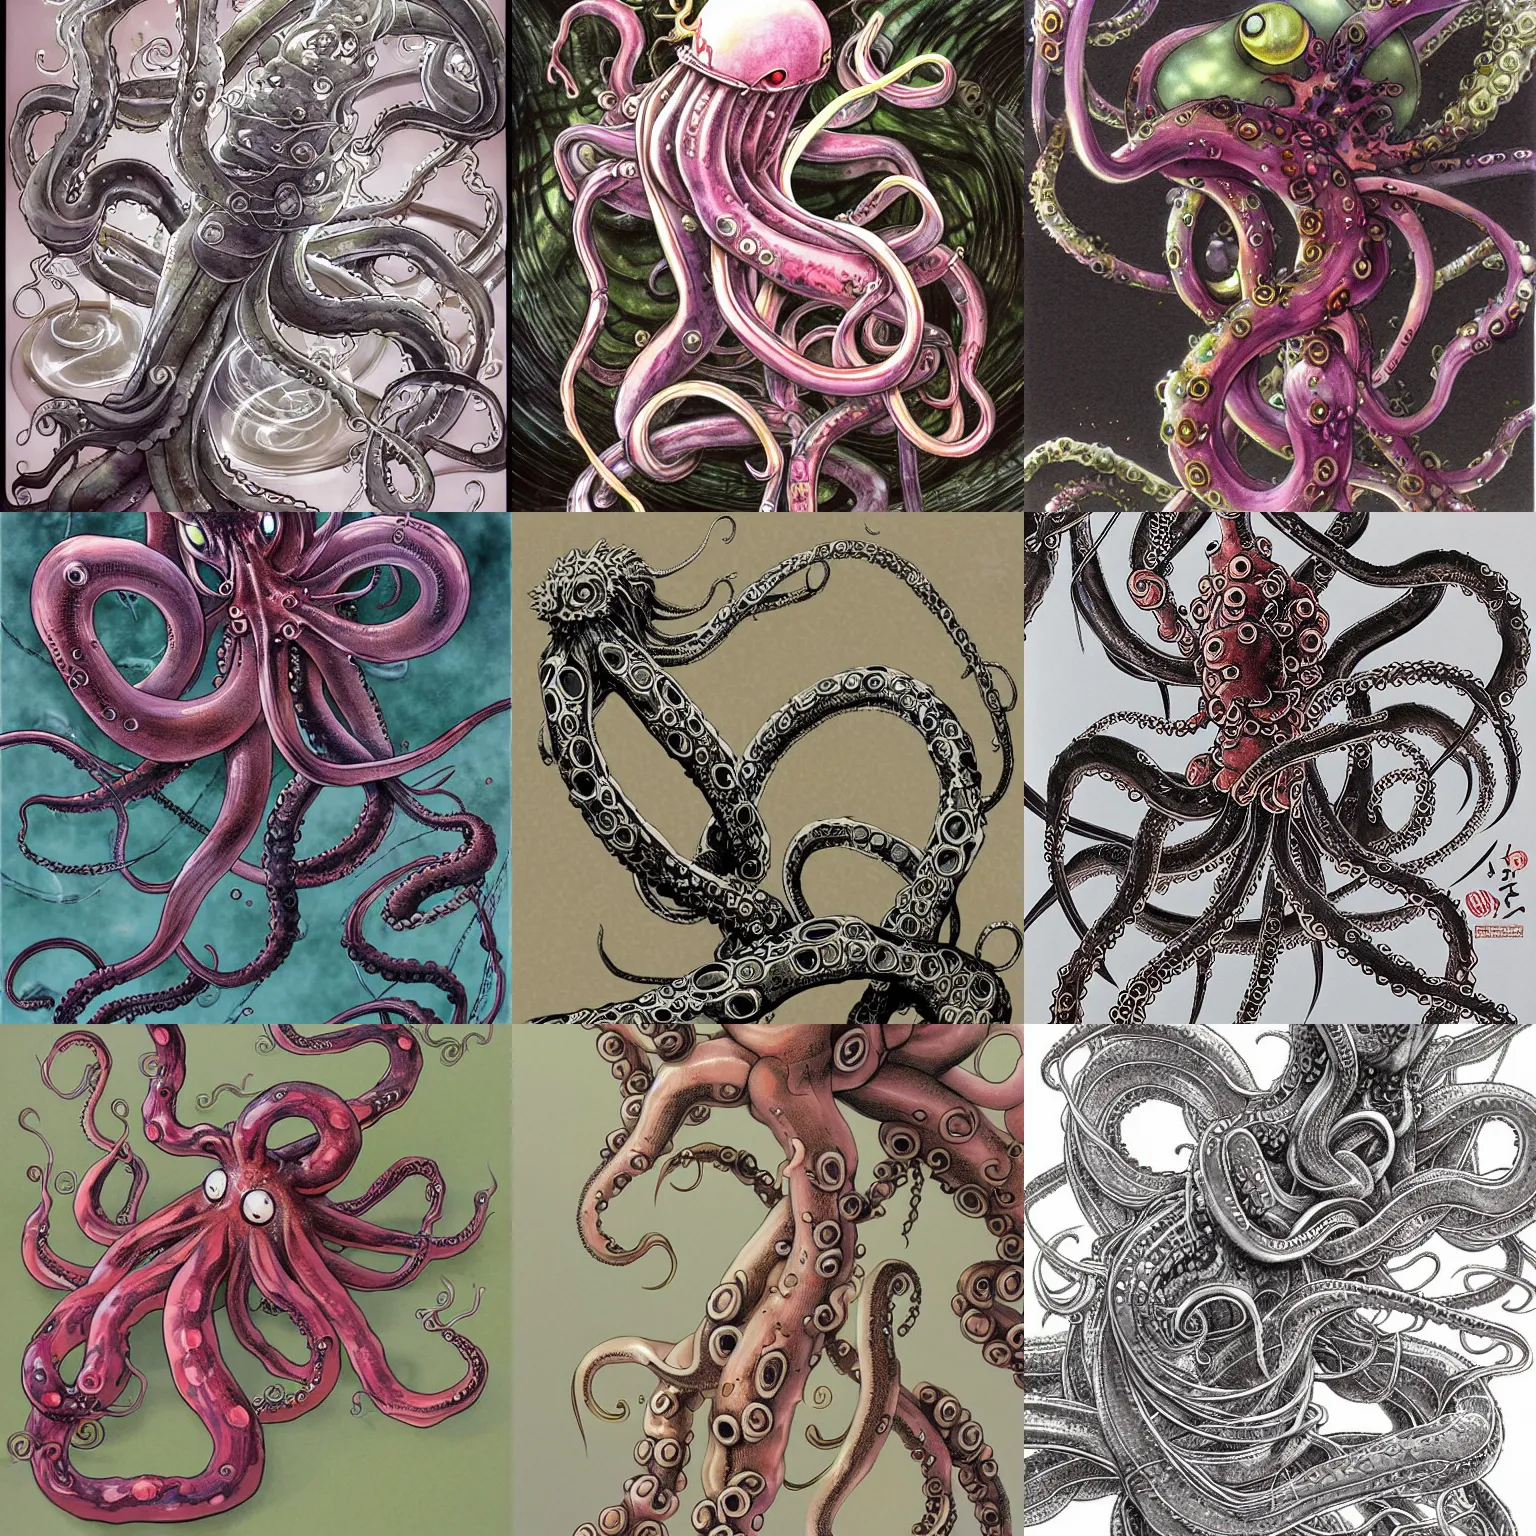 Prompt: tentacles artwork by yoshitaka amano